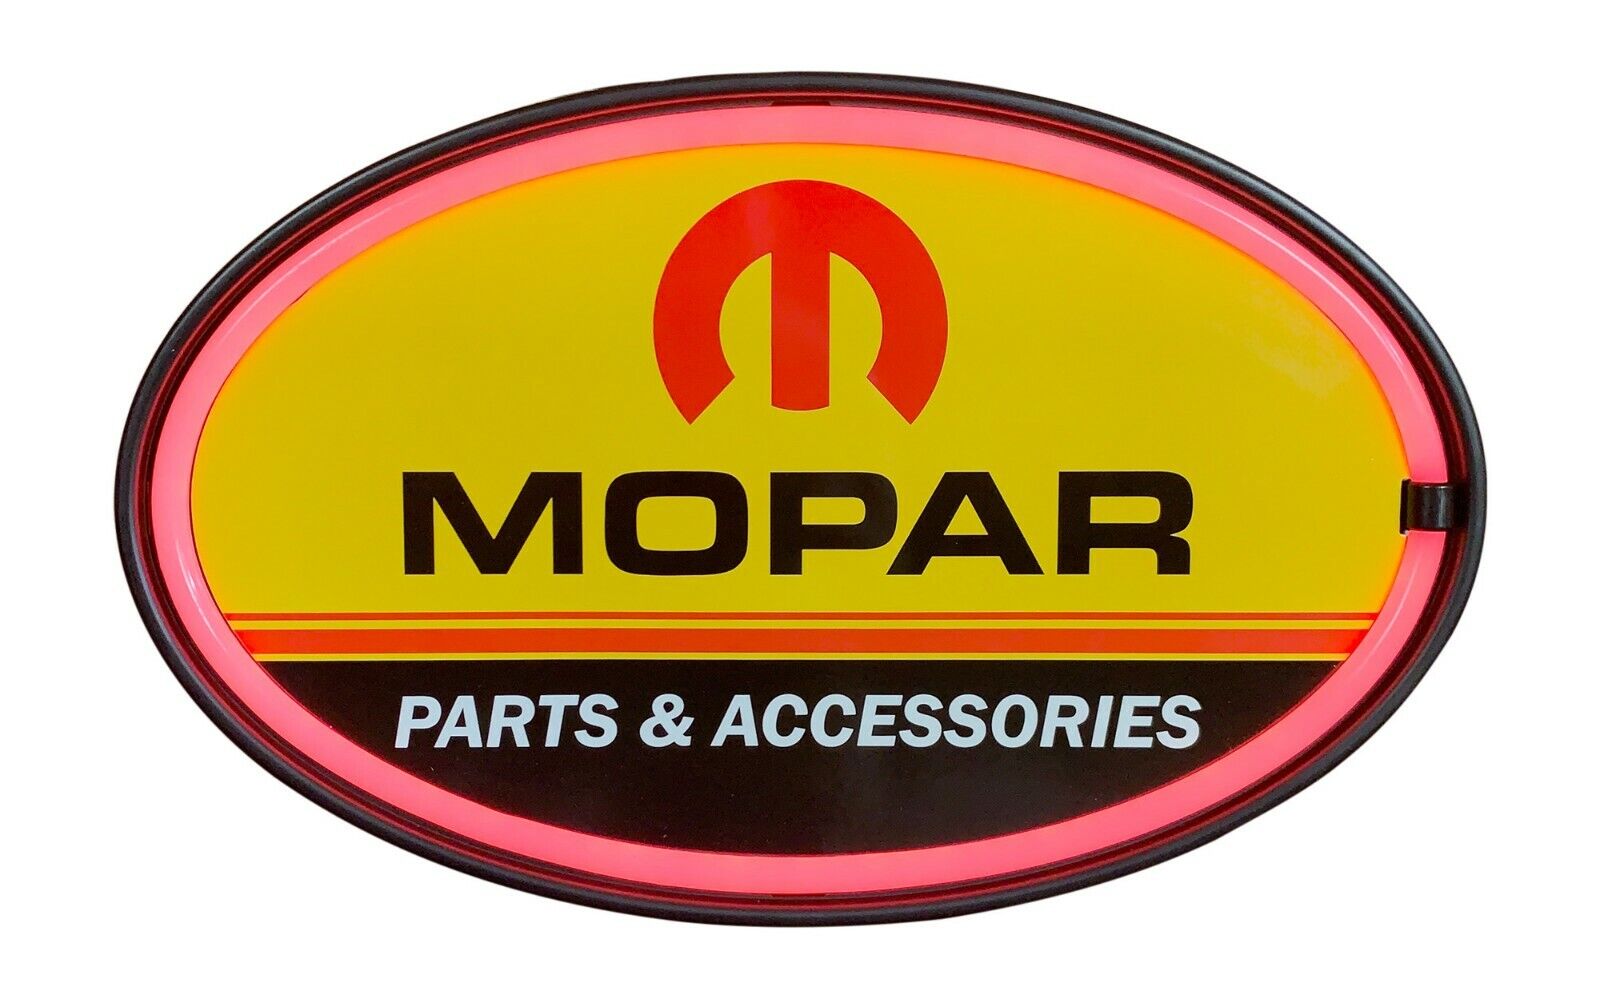 Mopar Parts & Accessories LED Neon Light Oval Rope Bar Sign Man Cave Decor